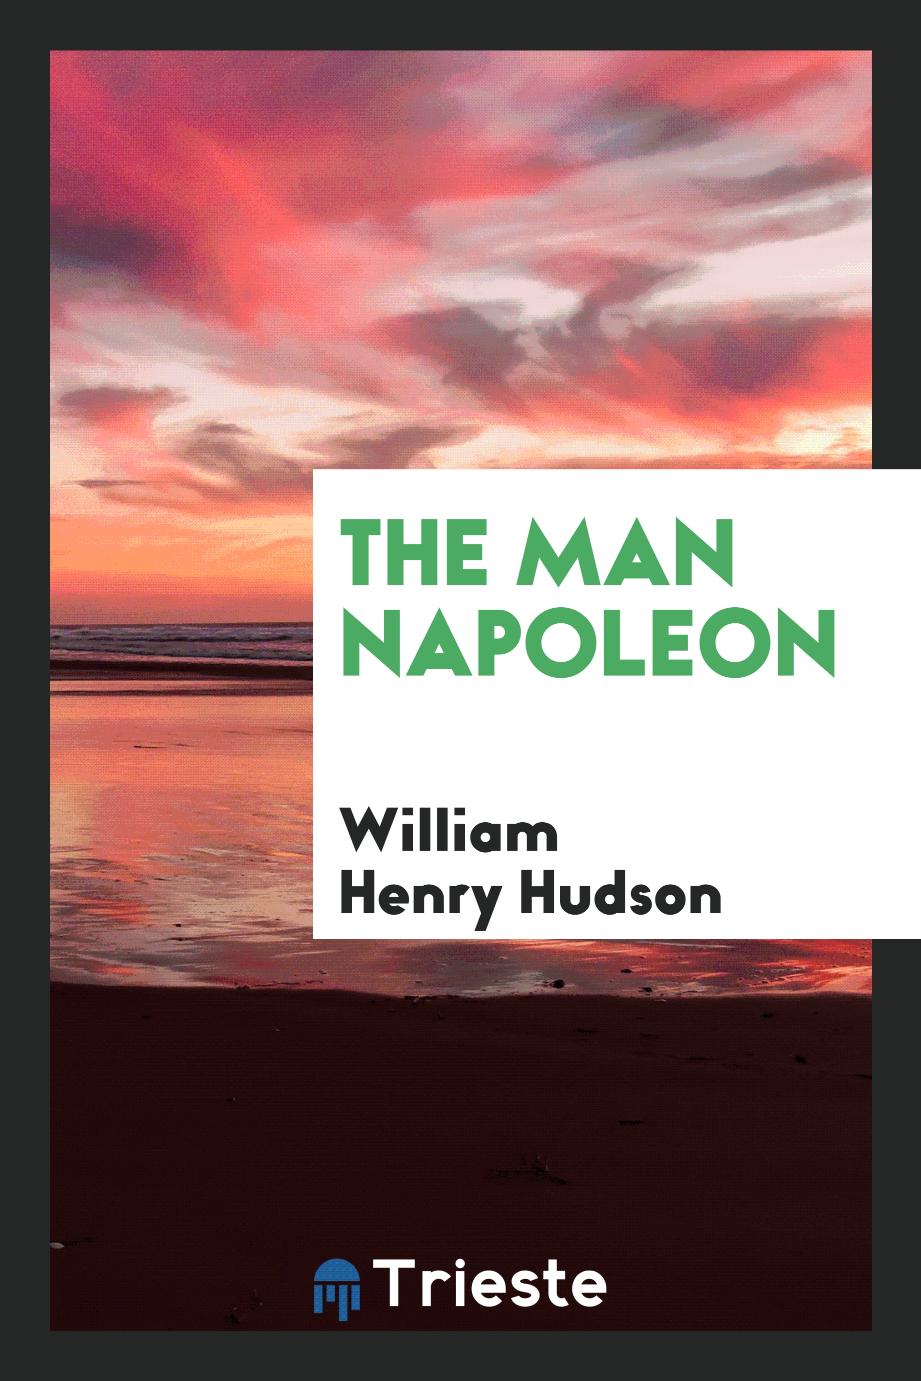 The man Napoleon